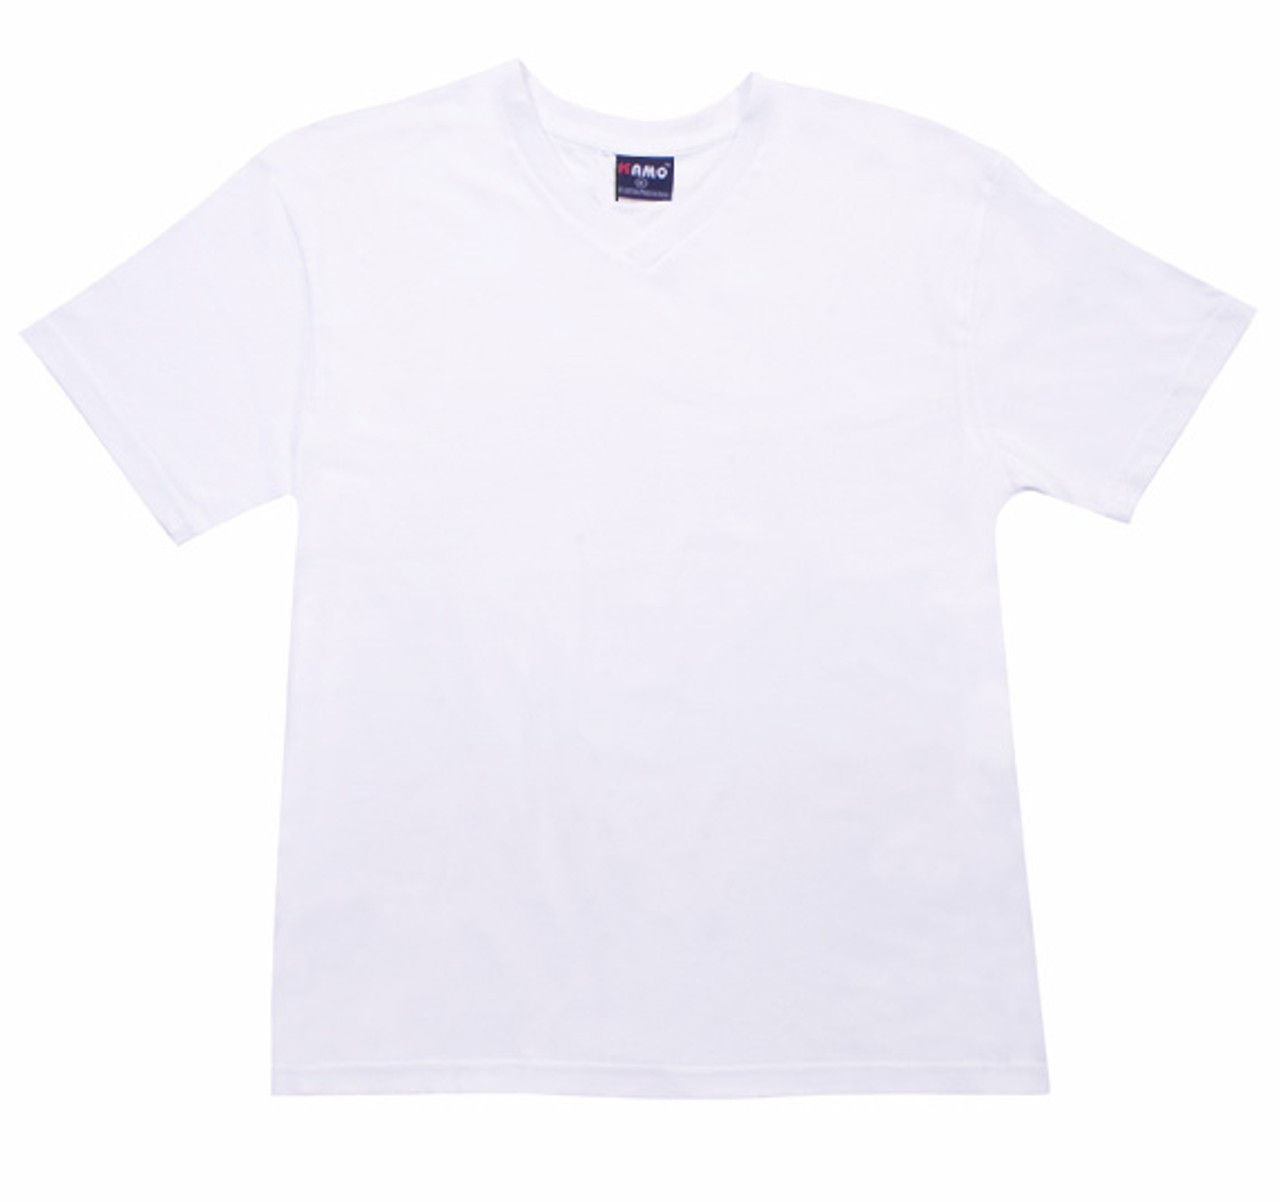 Shop Men Slim Fit V-Neck Tshirts | Bulk Buy Blank Tees Australia Online